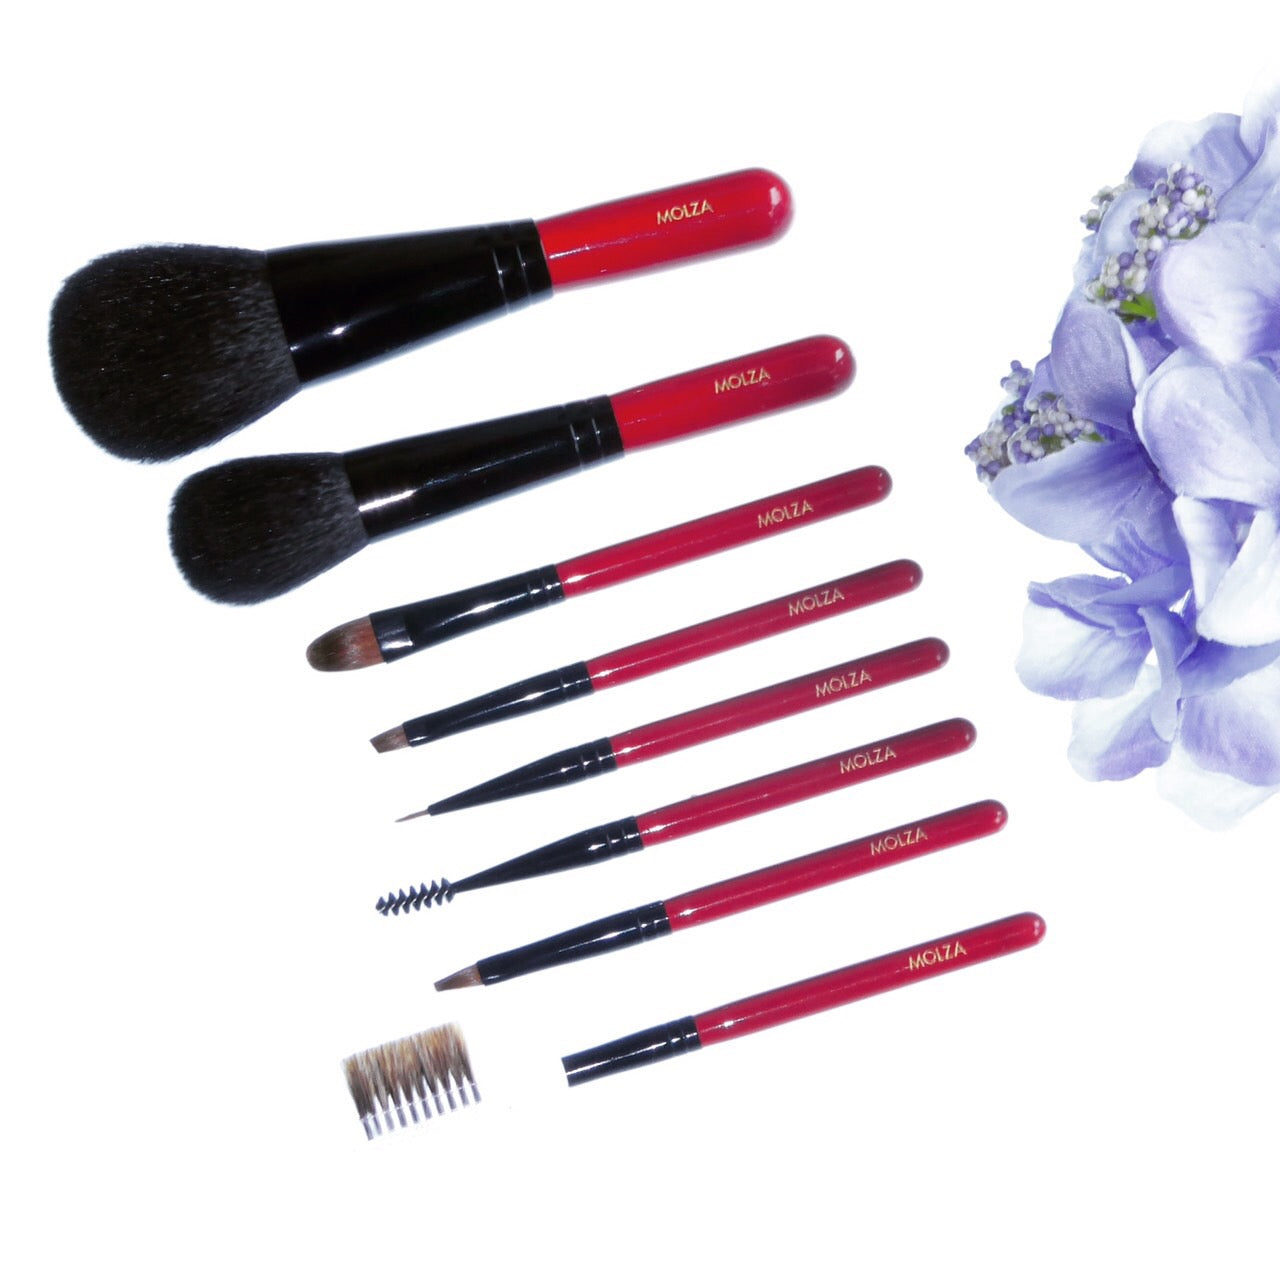 KUMANO Brush Makeup Powder Cheek Eye Shadow Brow Liner Lip Comb Screw 8 Type Set - JAPANESE GIFTS 